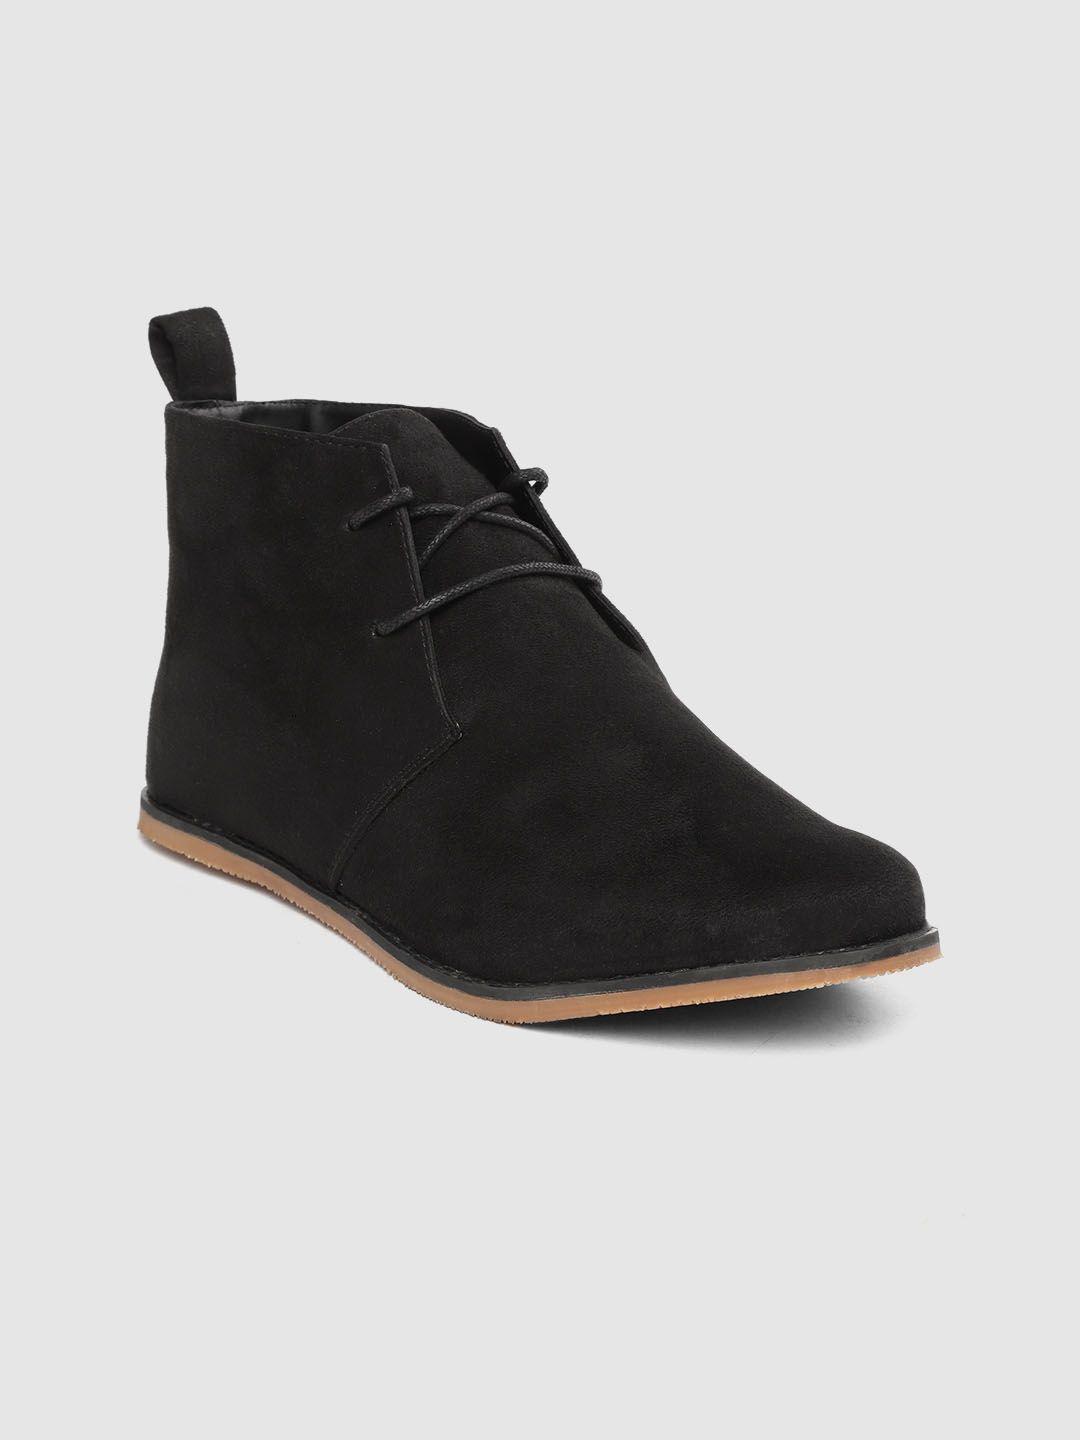 carlton-london-women-black-solid-mid-top-flat-chukka-boots